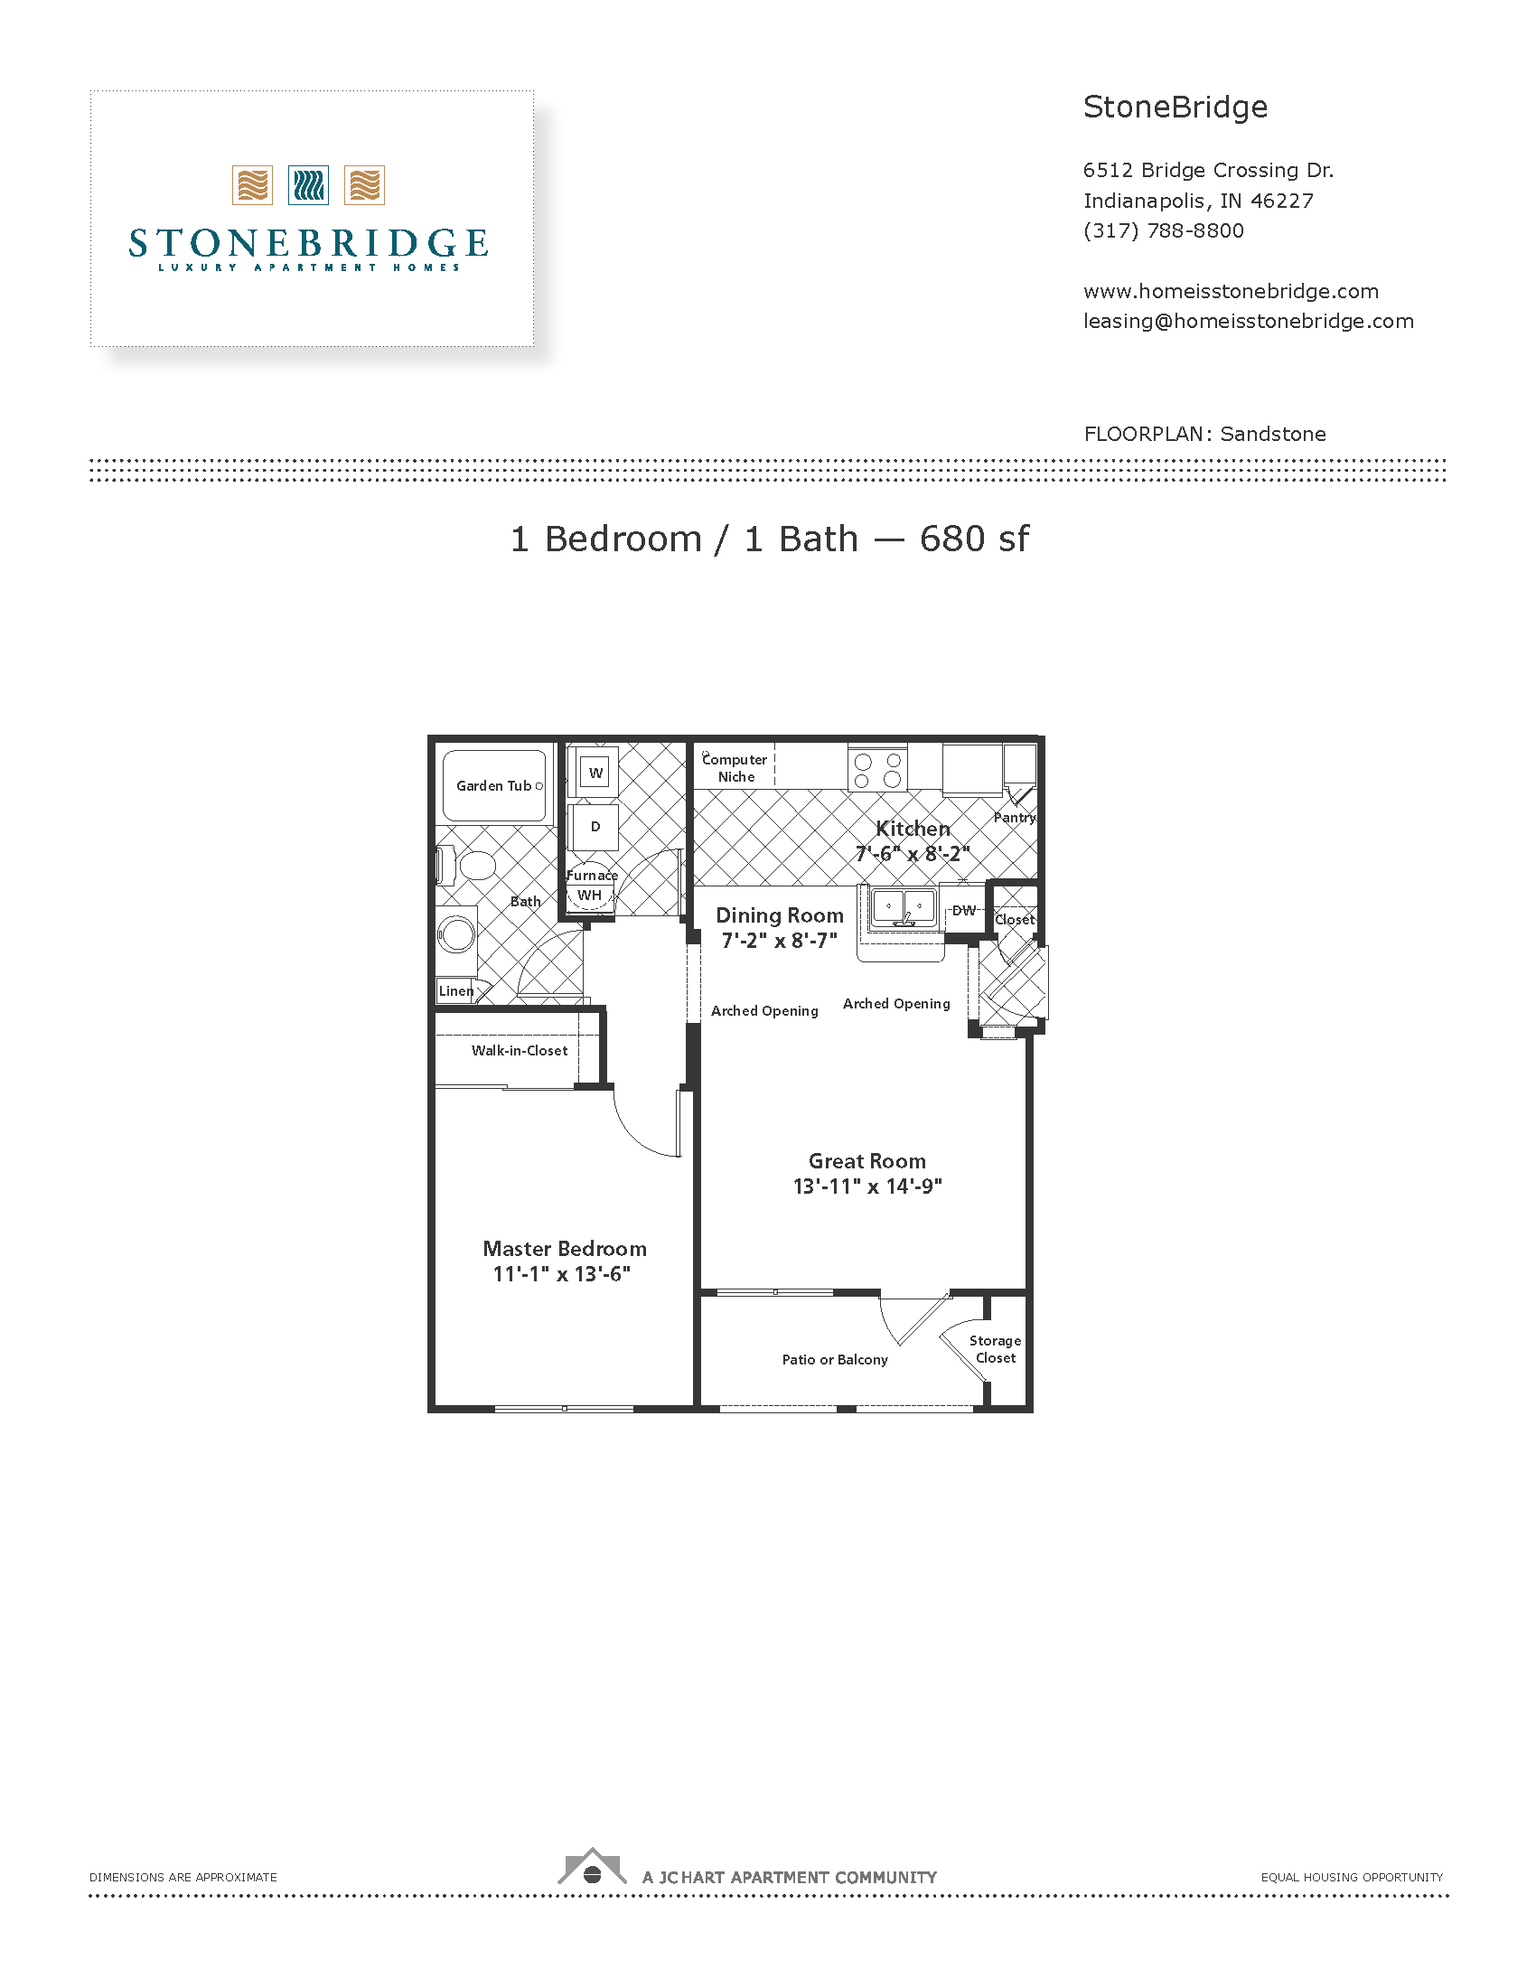 Sandstone floor plan - StoneBridge Apartment Homes _ Indianapolis apartments_preview.png